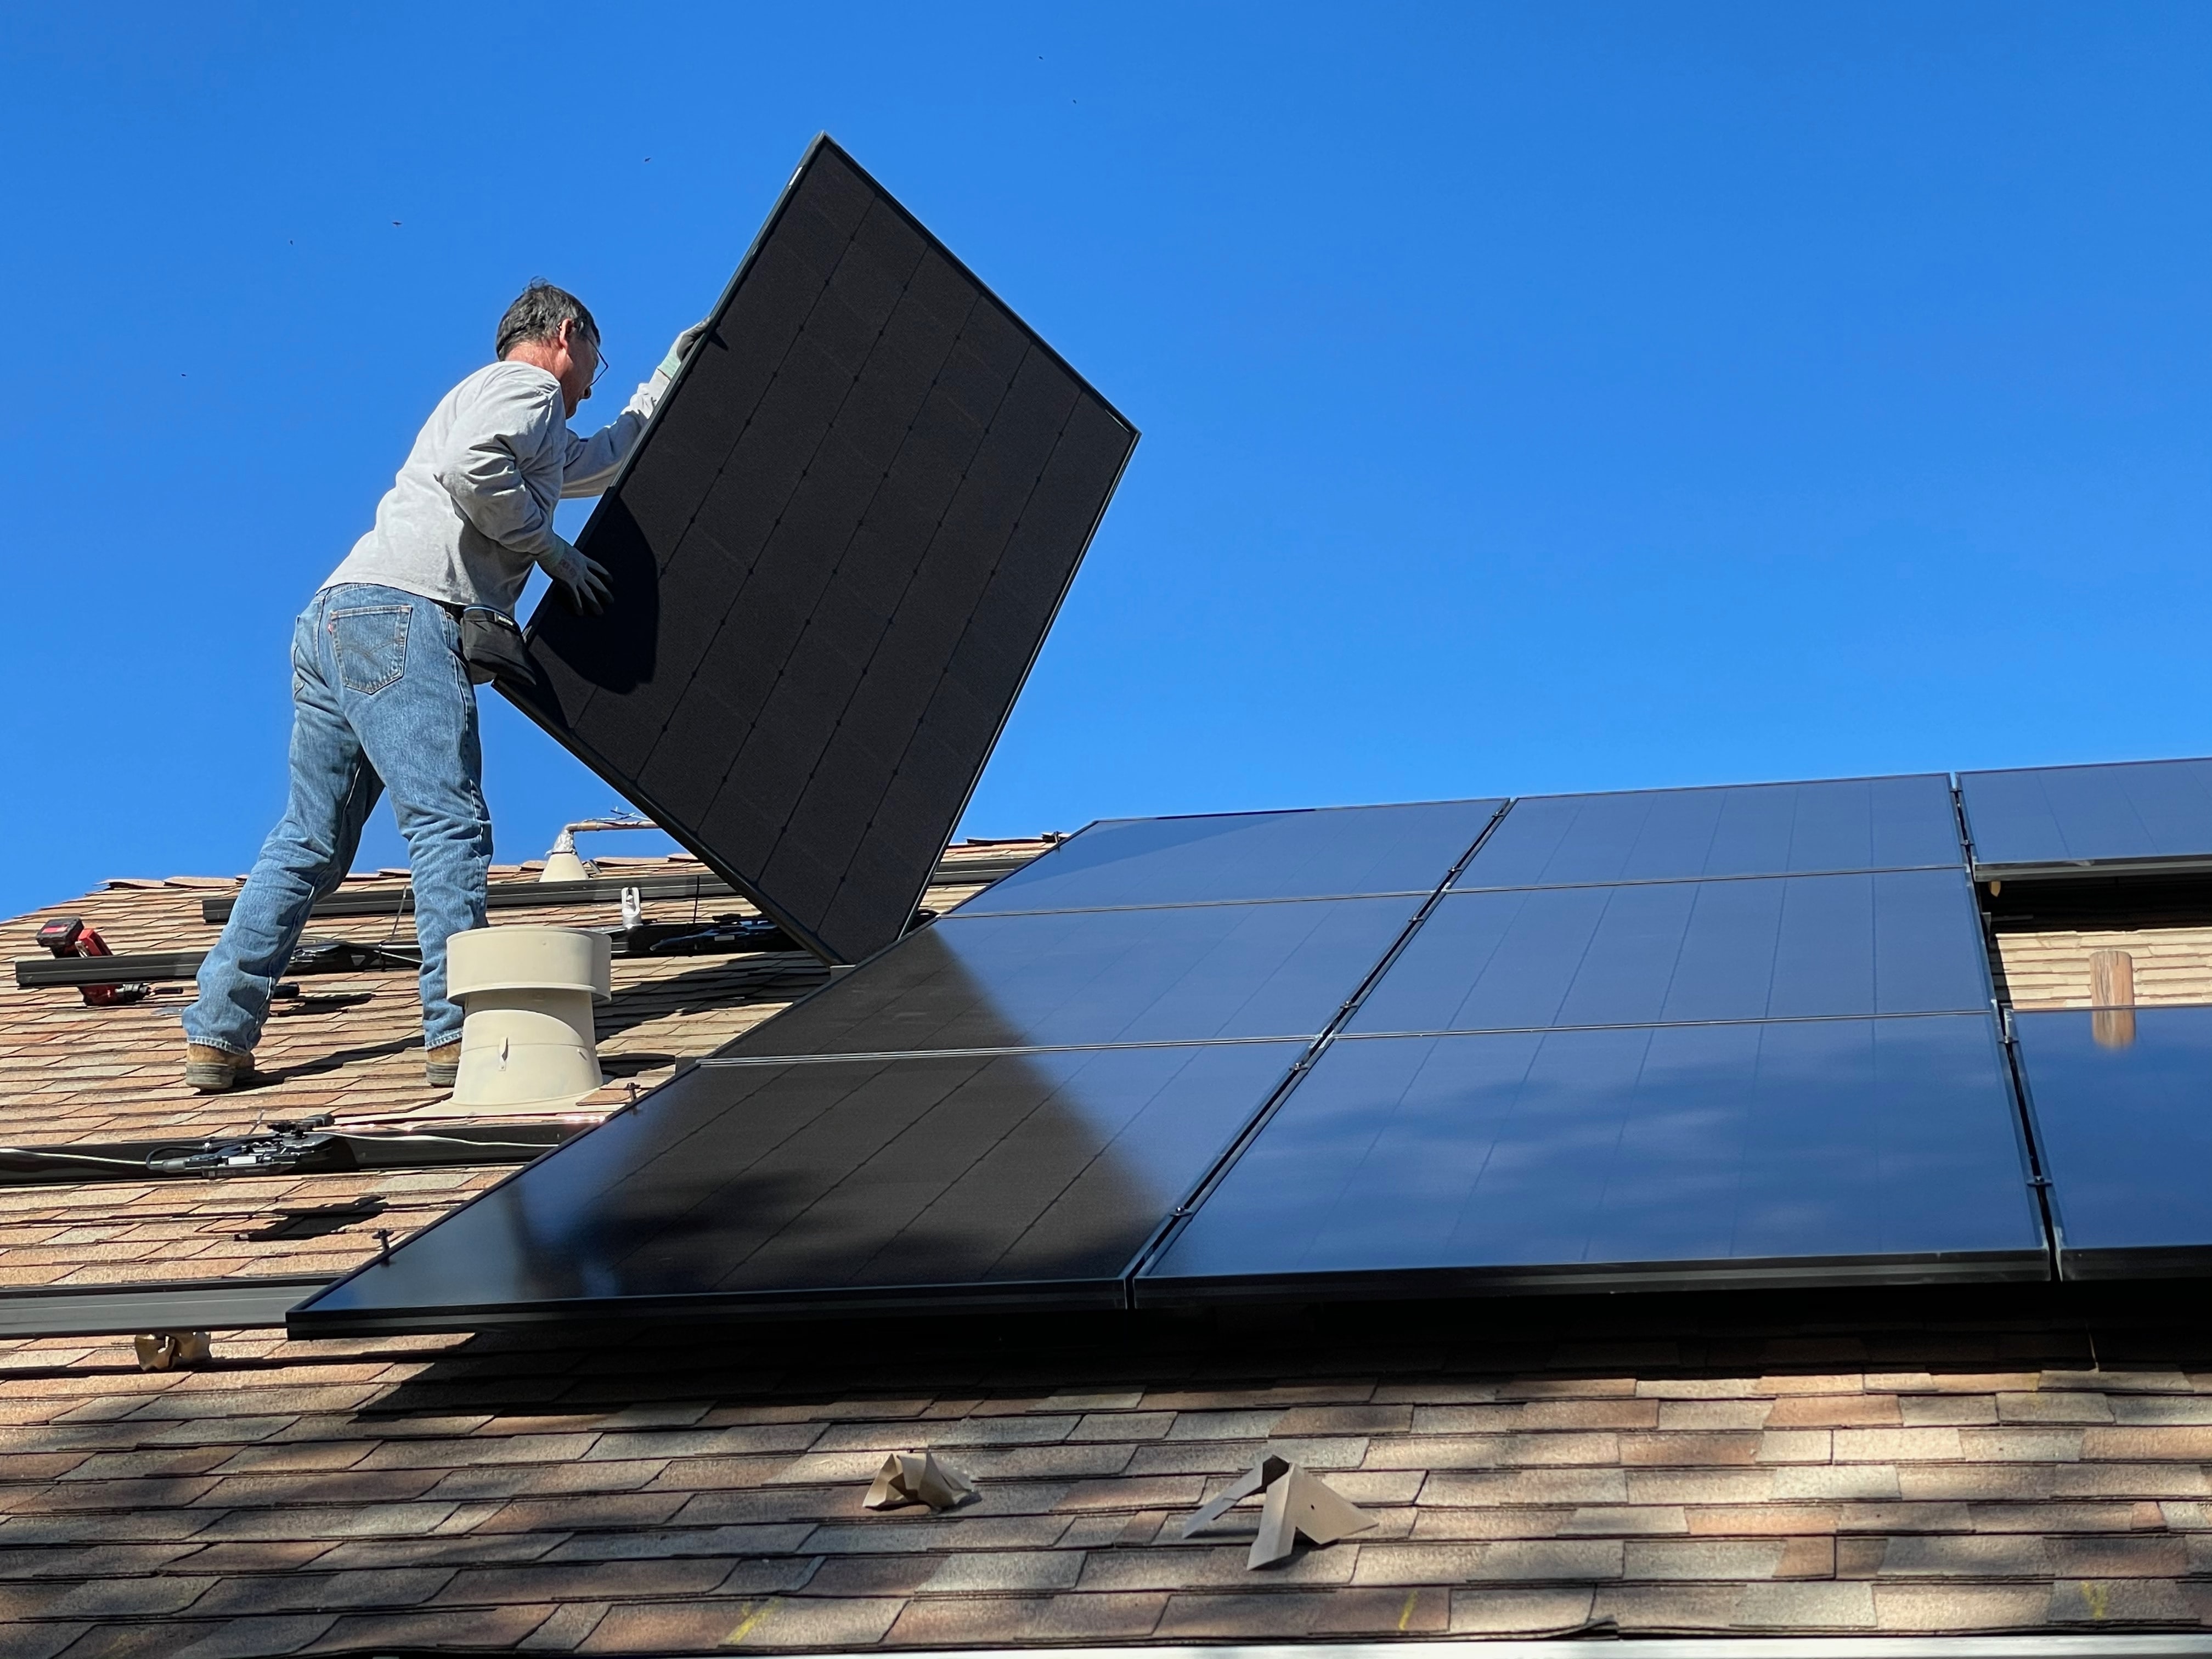 Man installing solar panels. Photo by Bill Mead on Unsplash